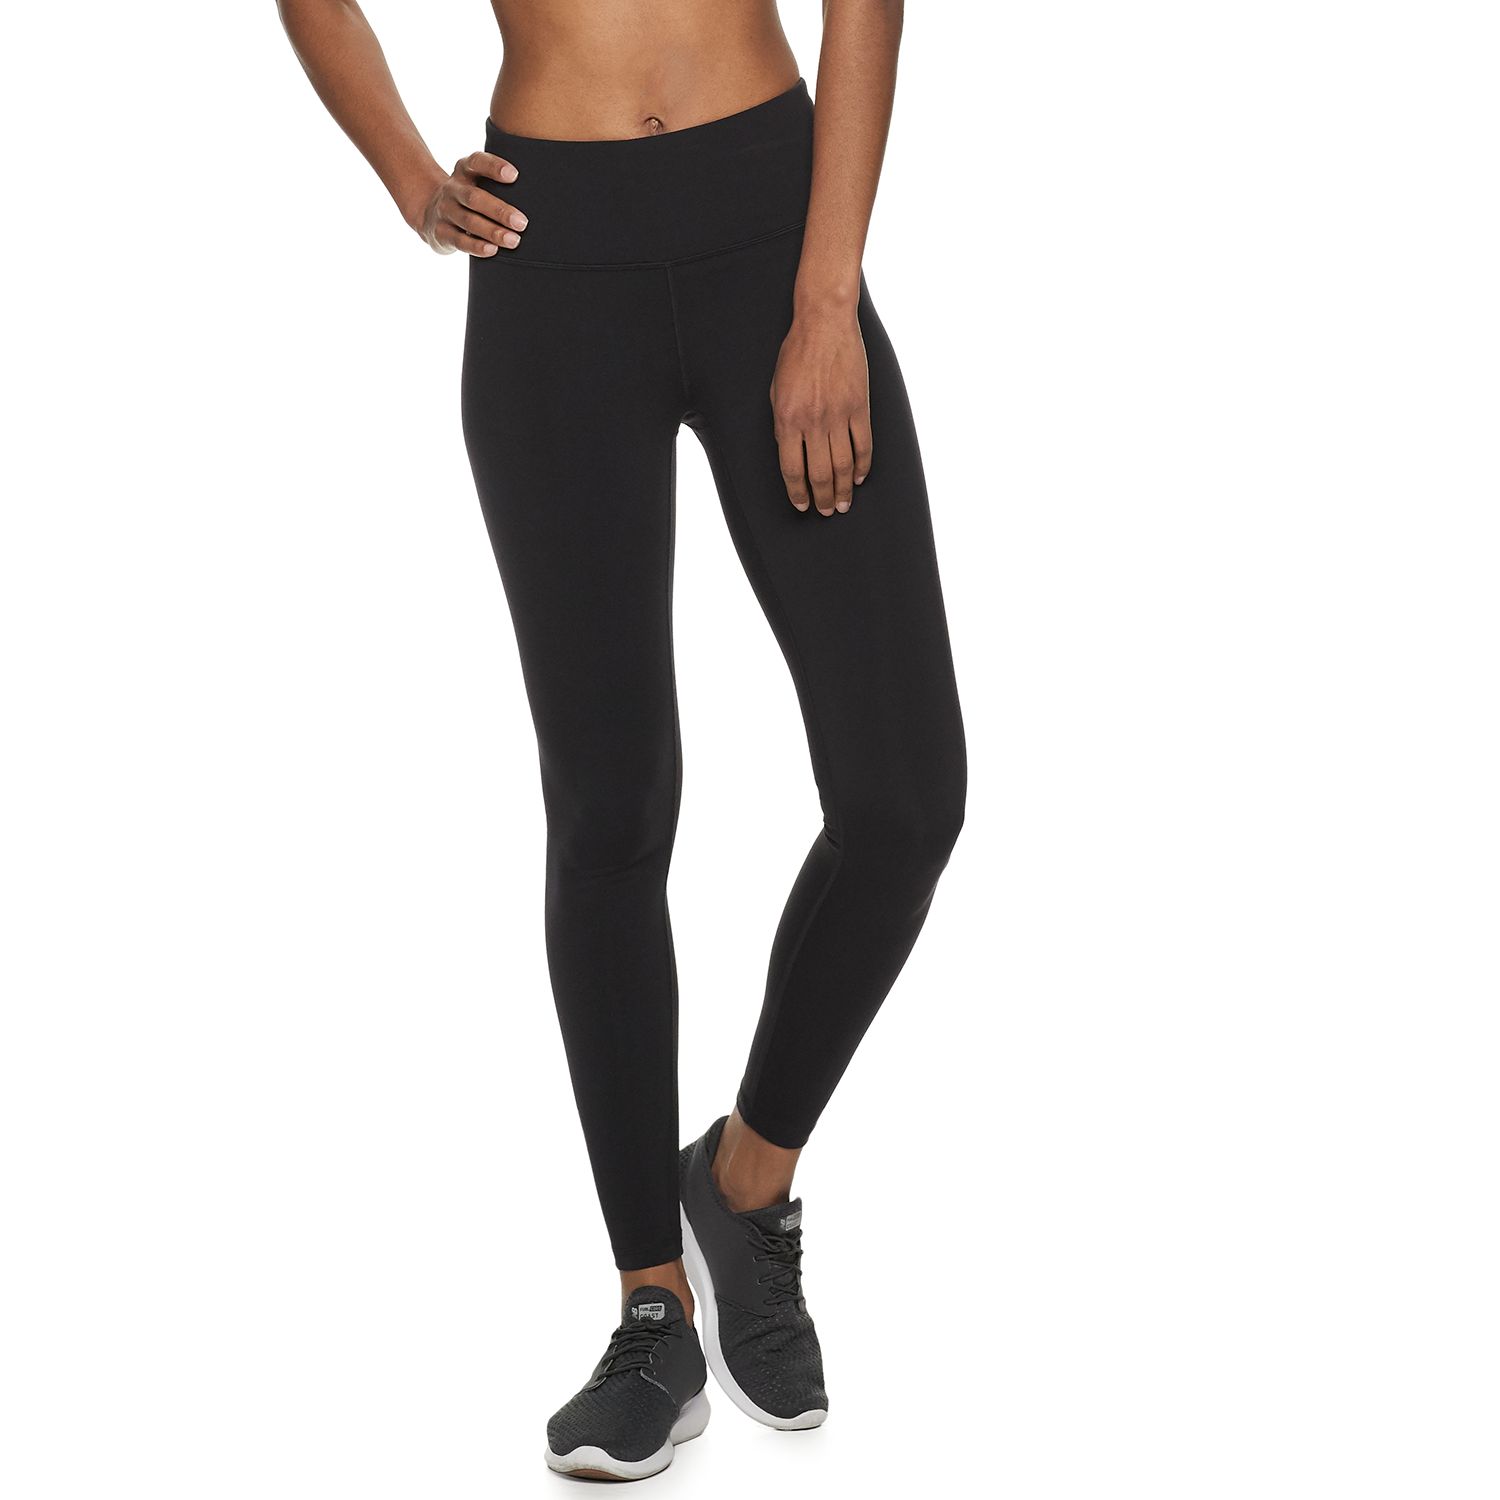 women's black workout leggings